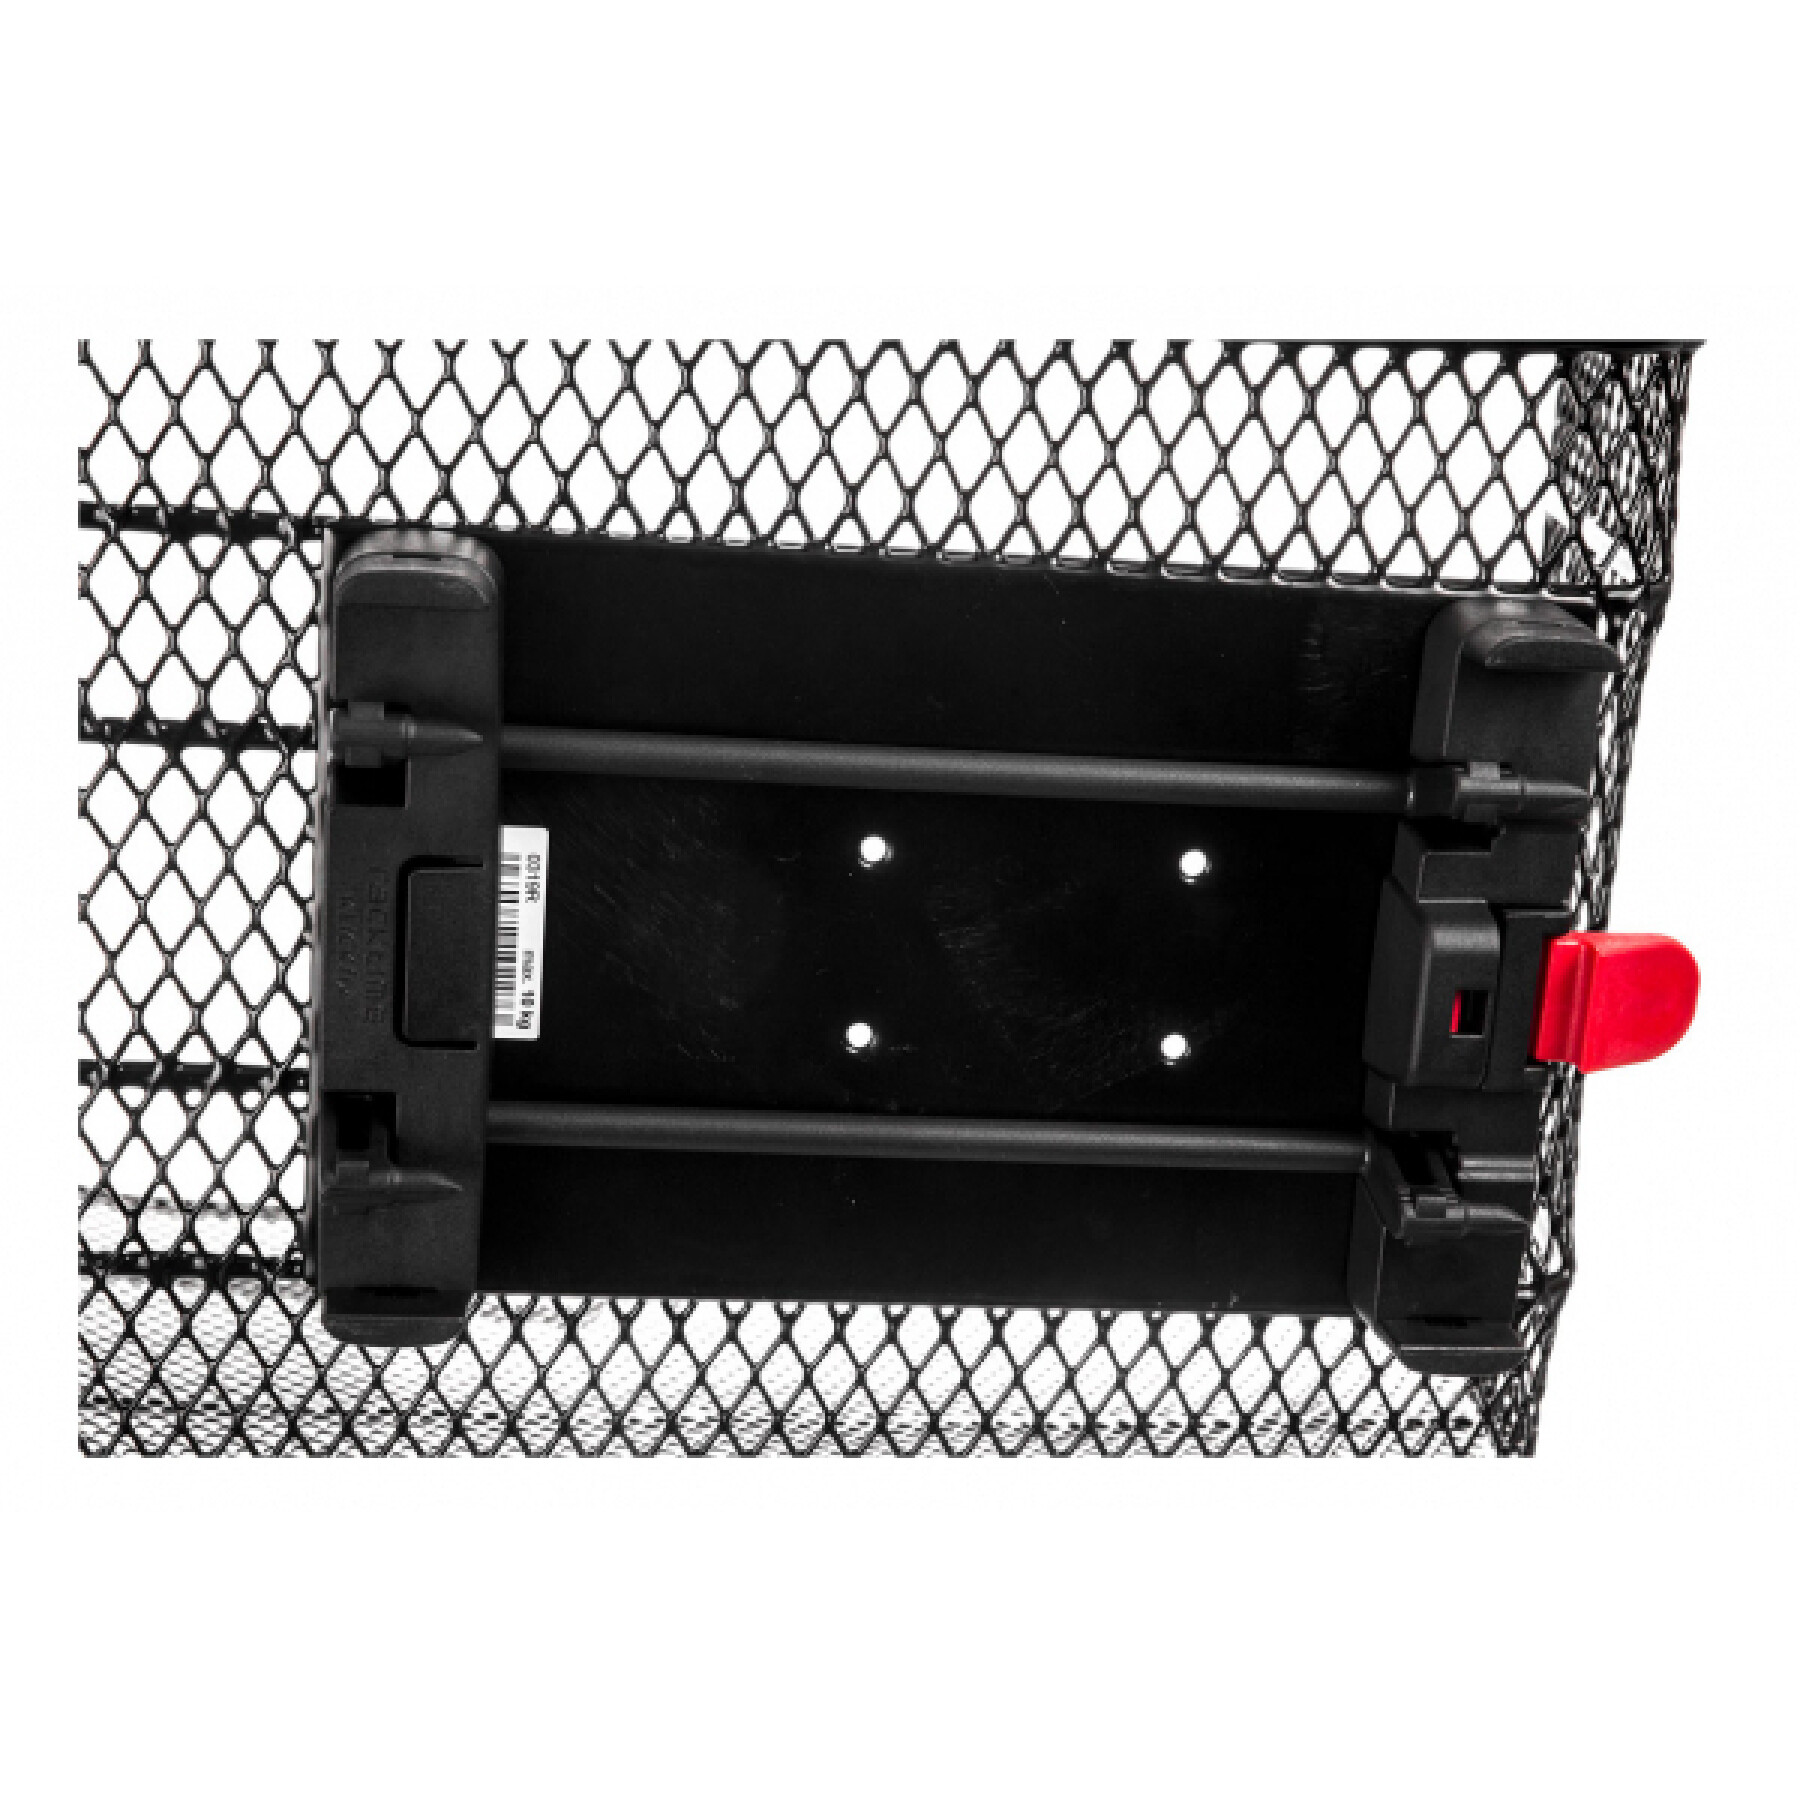 Rear basket narrow mesh for racktime including adaptable plate Klickfix citymax